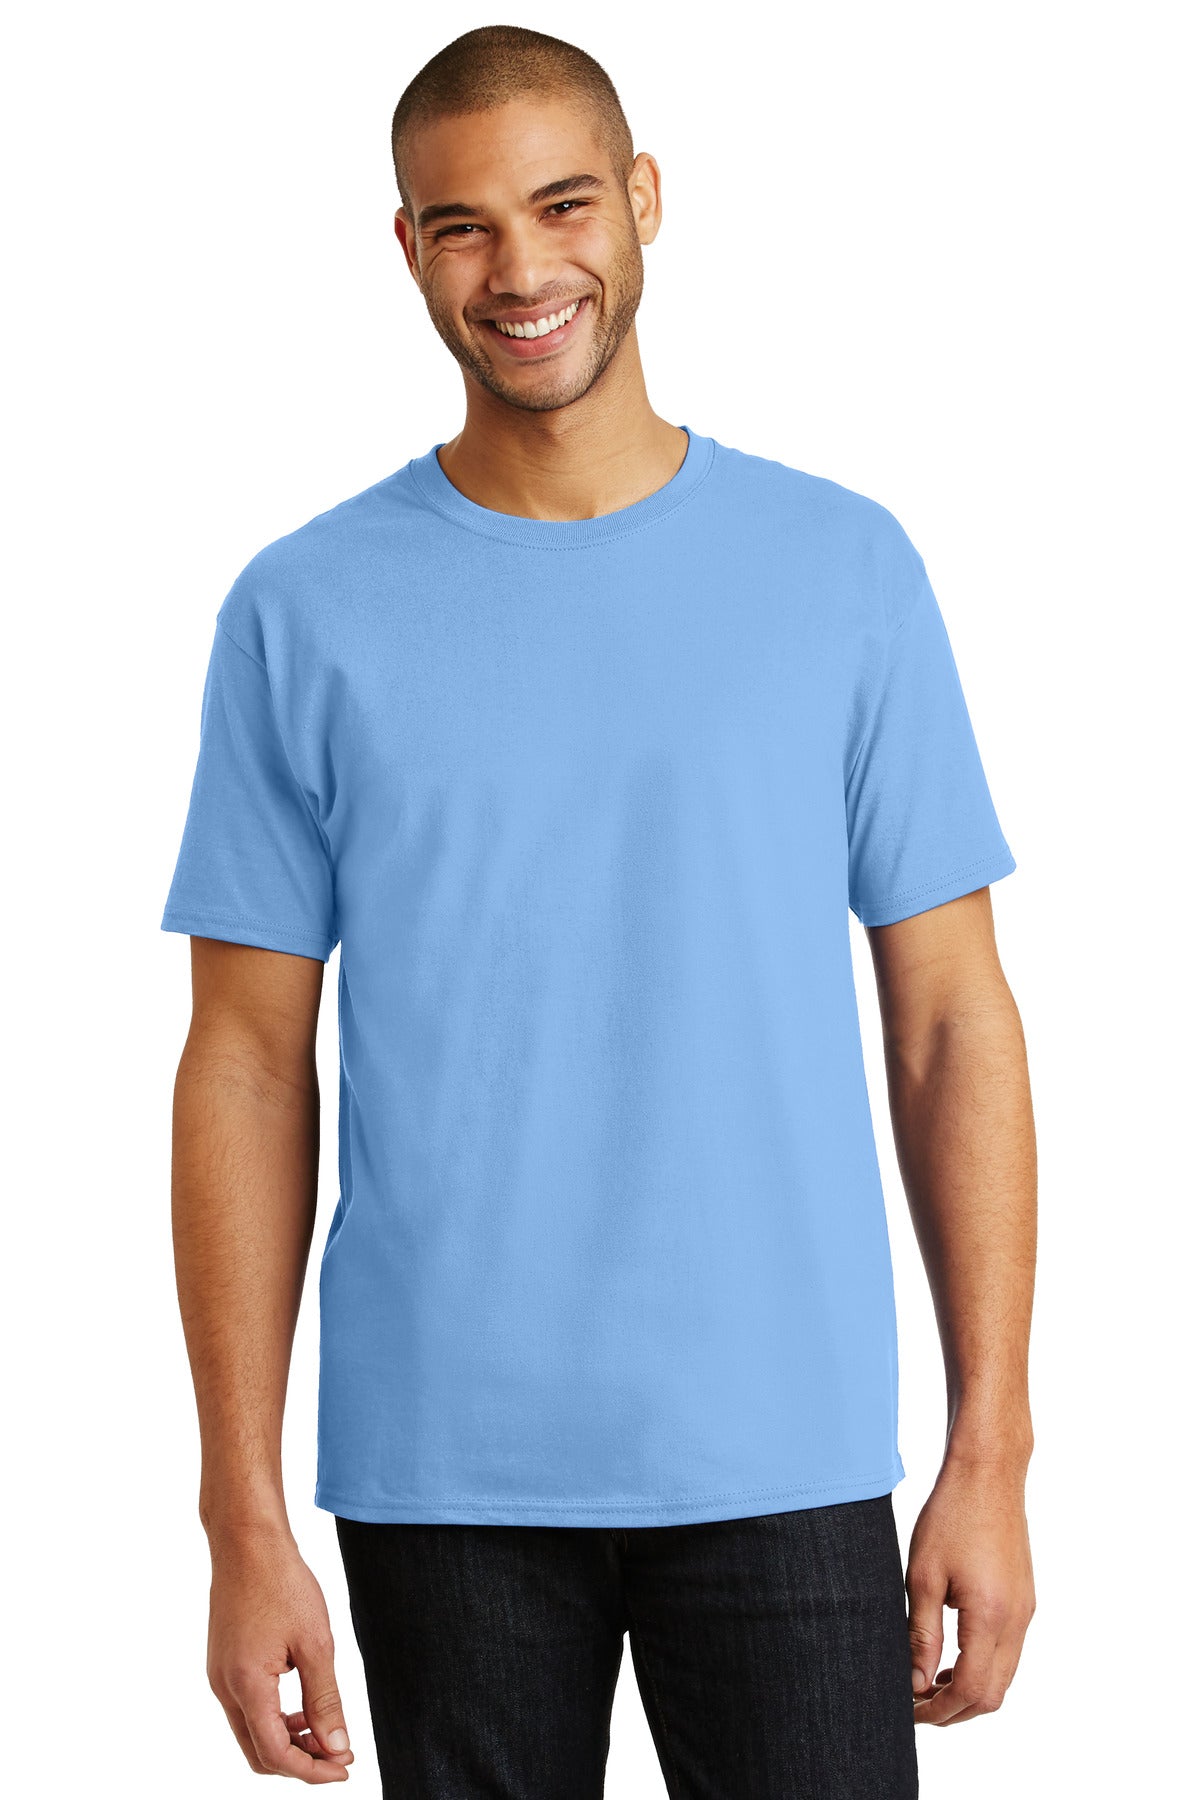 T-Shirts Carolina Blue Hanes